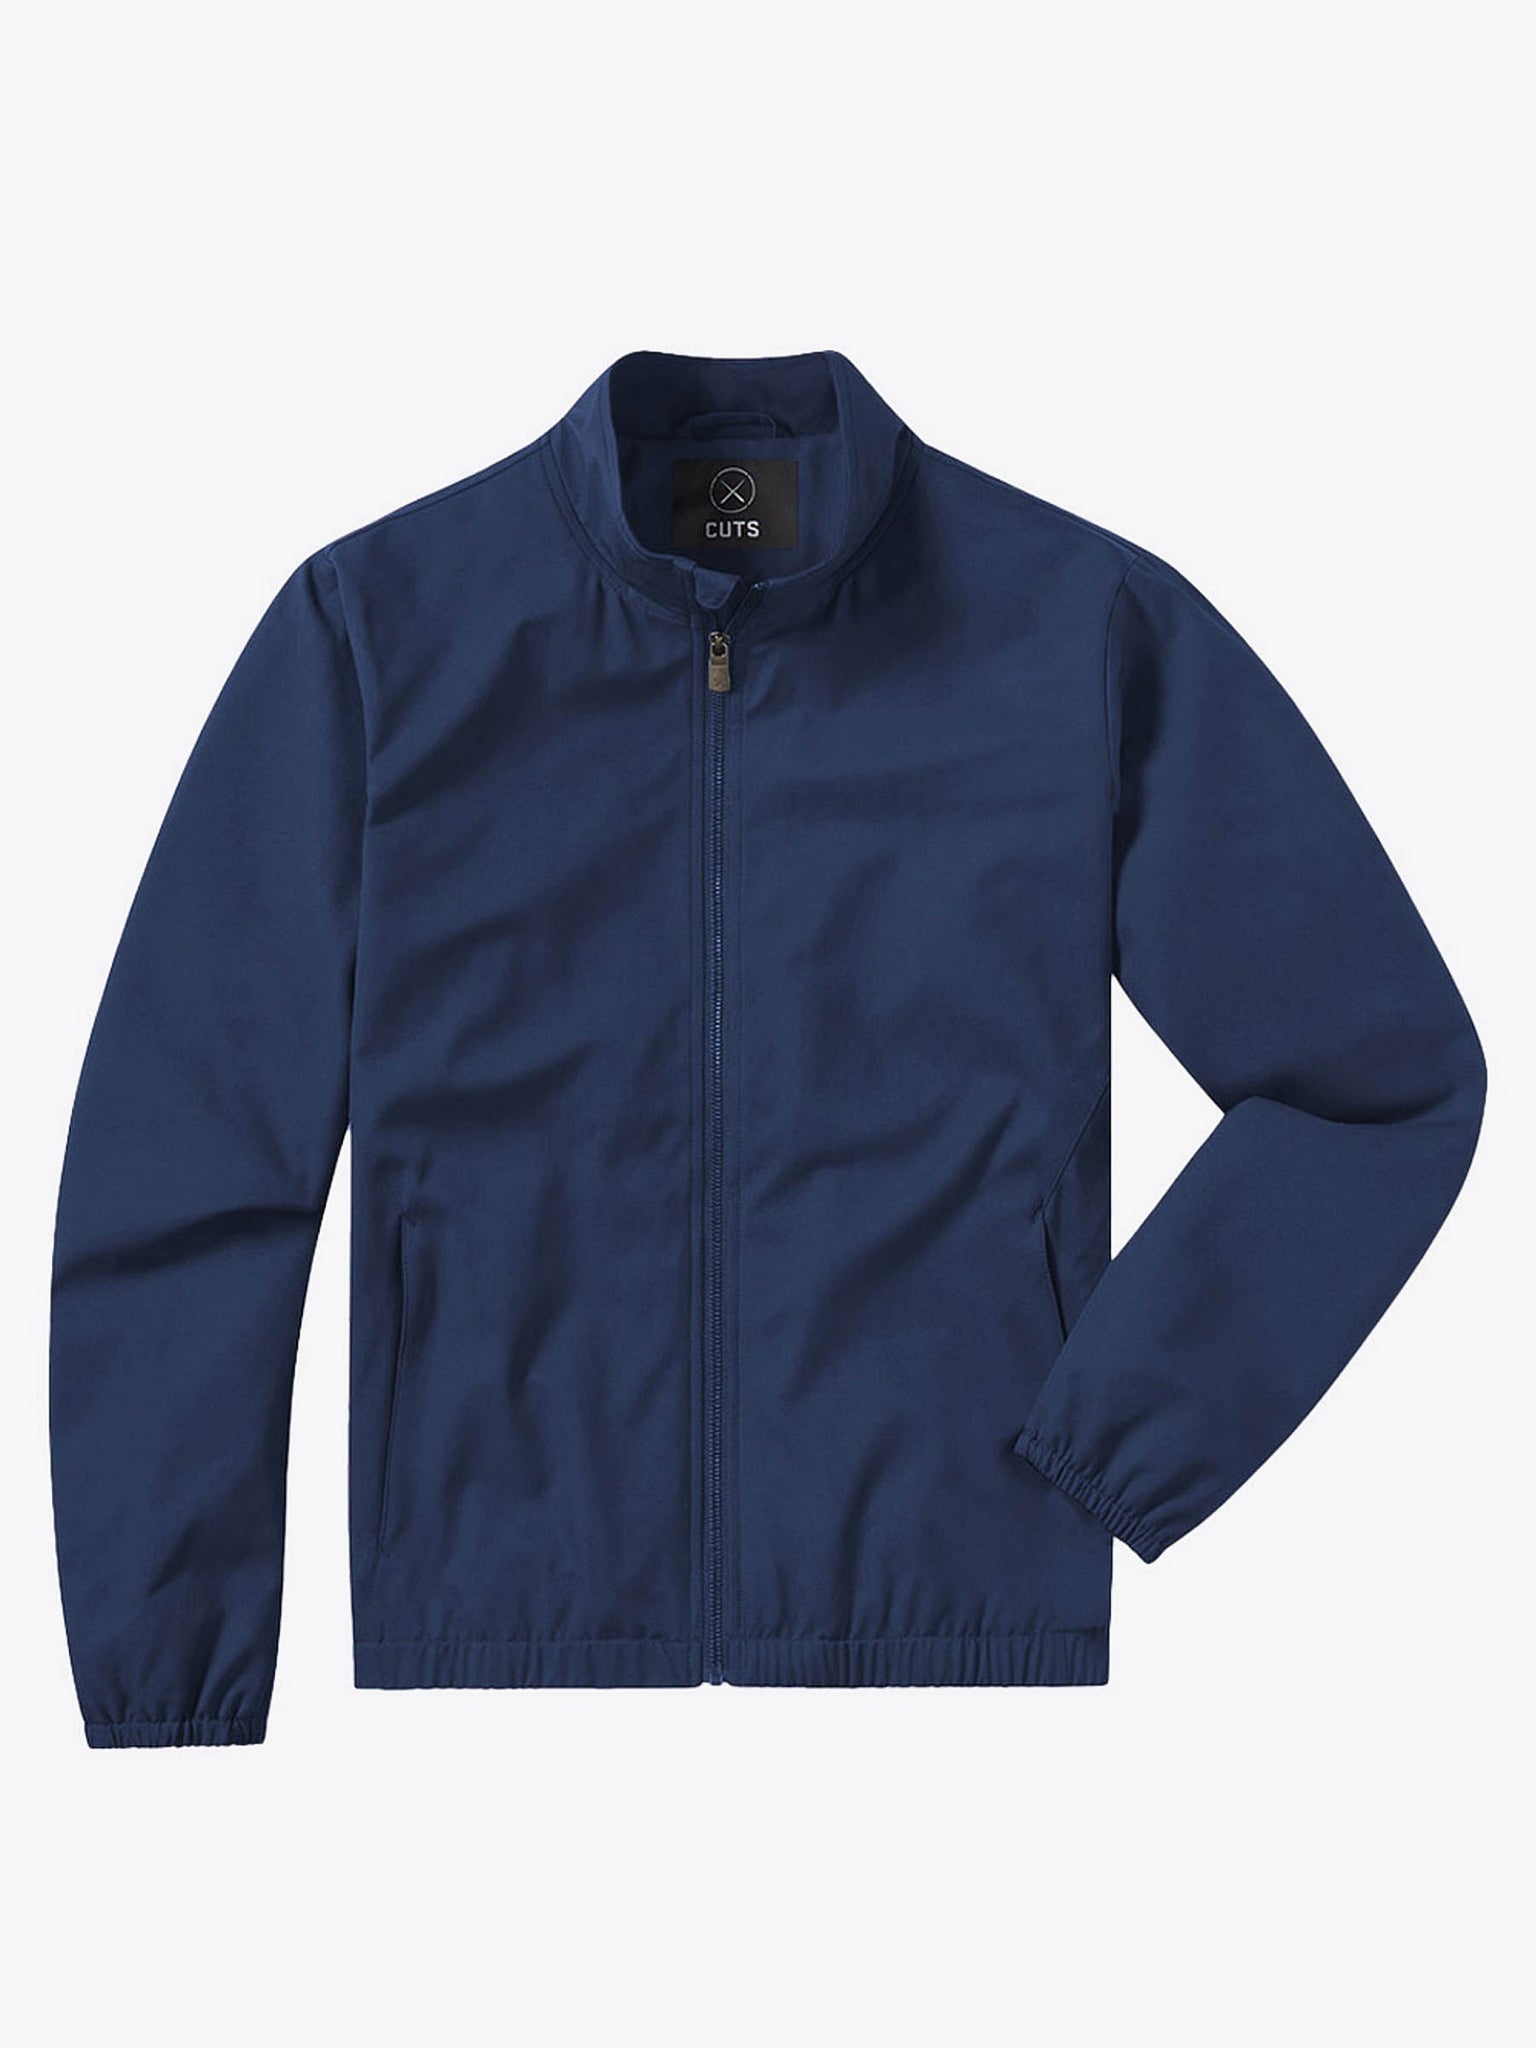 Nautica Lapis Blue Fleece Performance Jacket Boys Size Large NEW - beyond  exchange